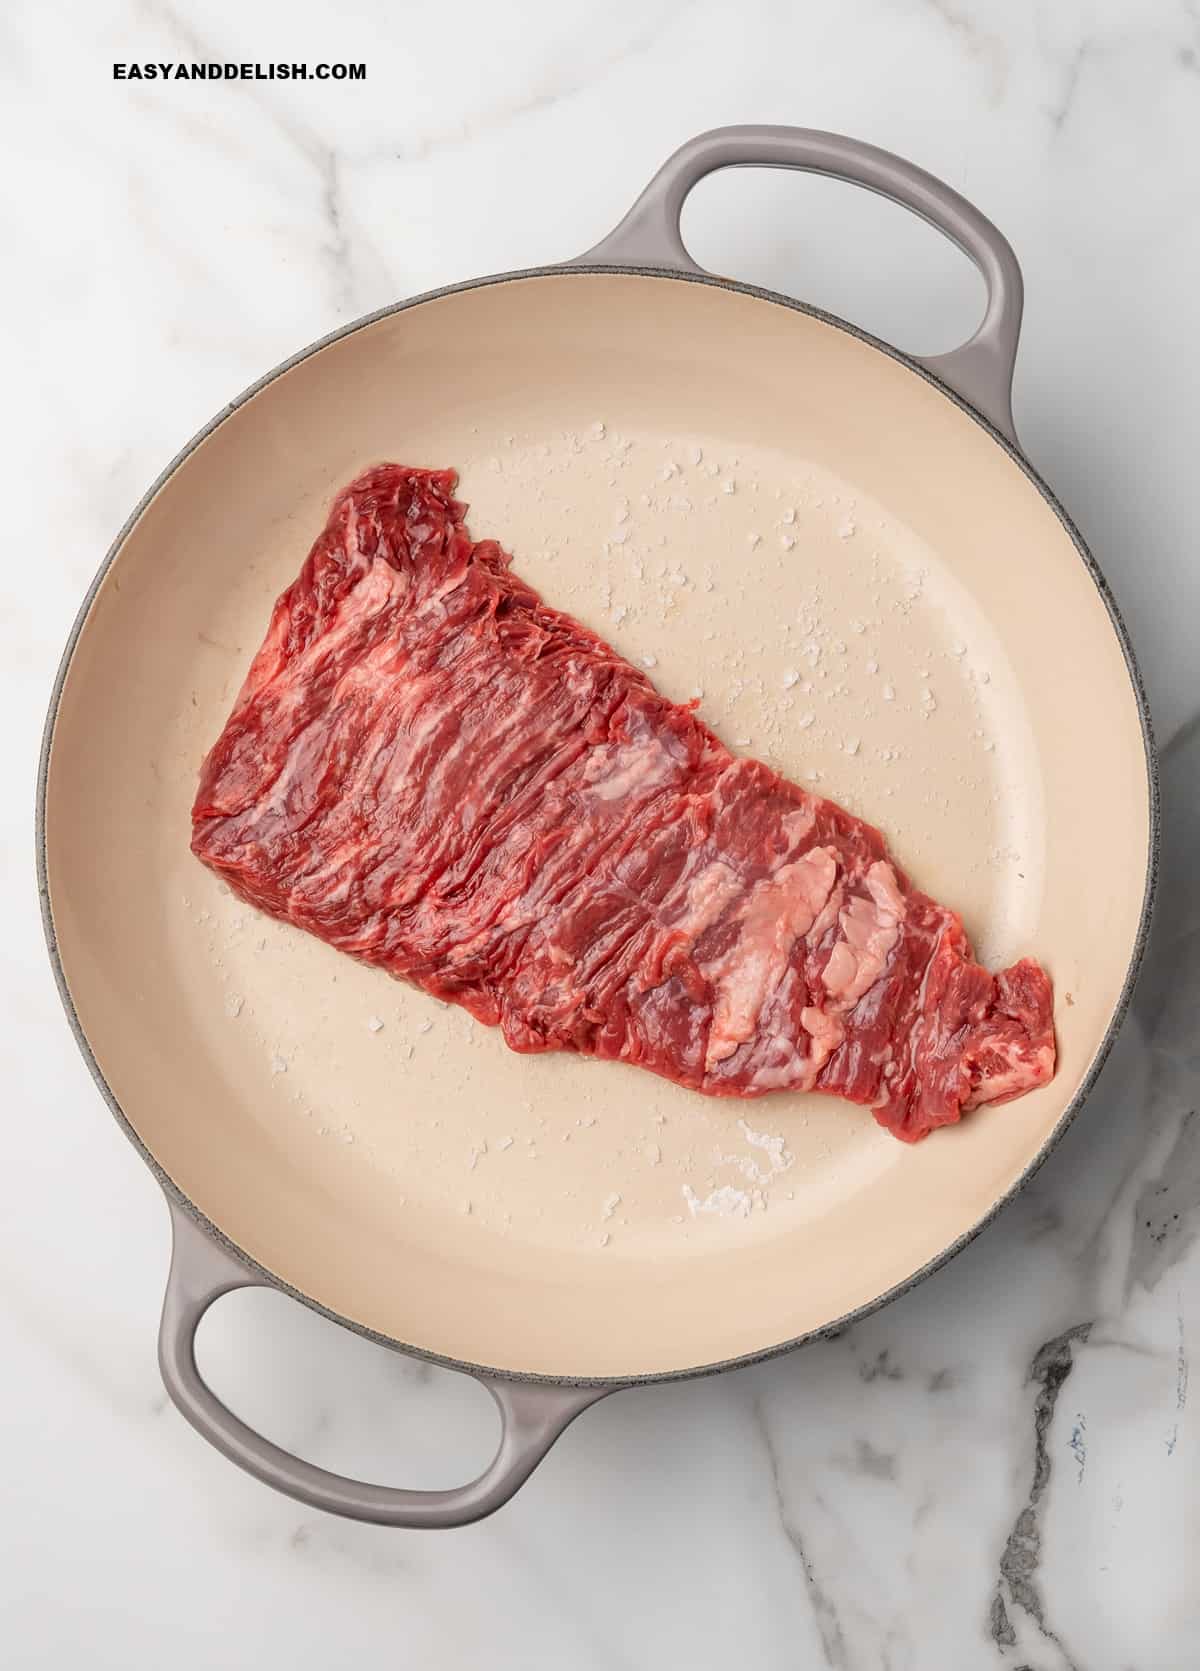 skirt steak in a pan over coarse salt